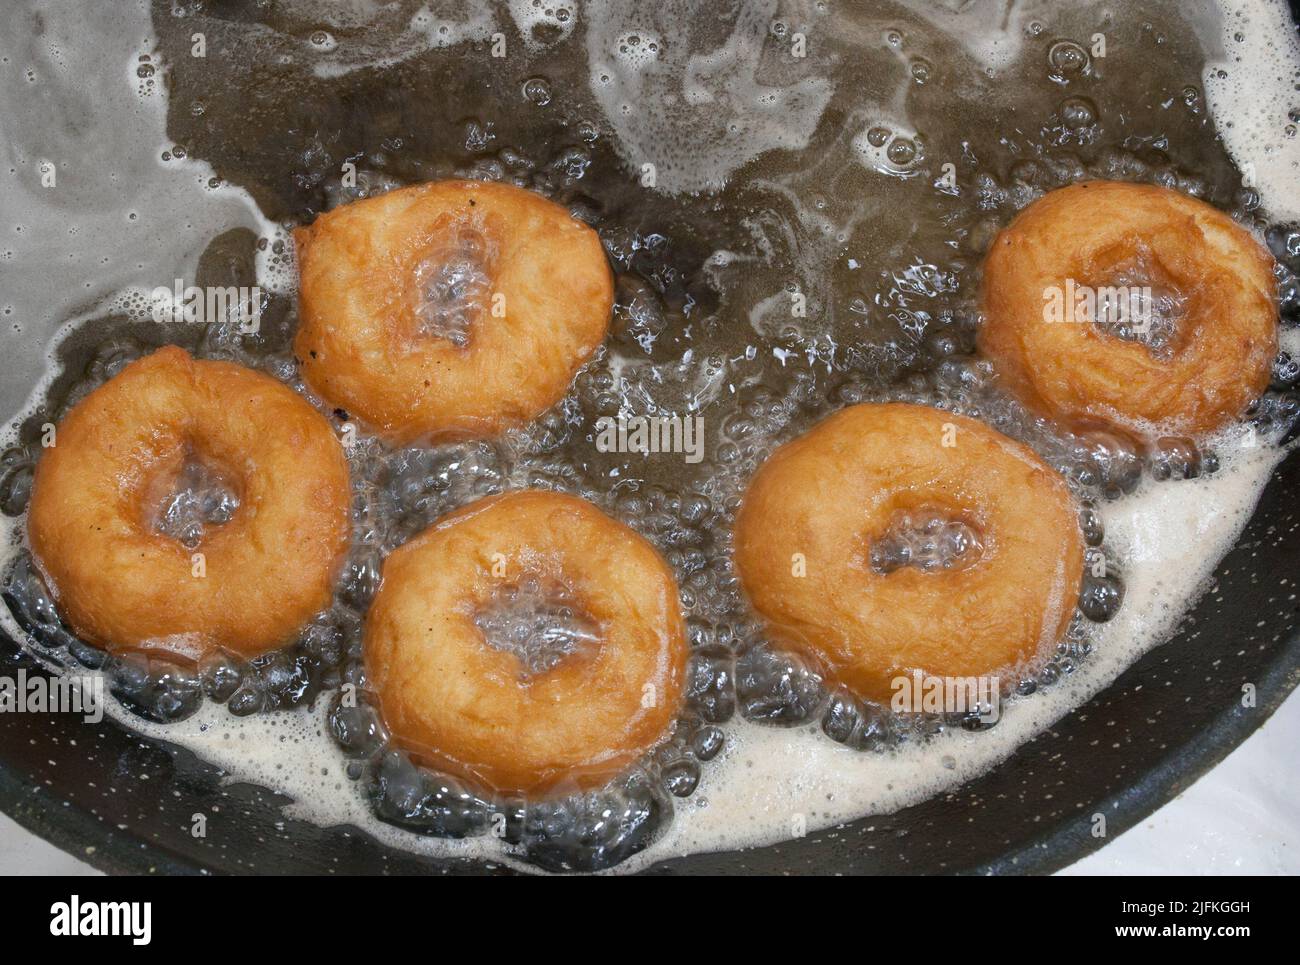 Proceso de elaboración de roscas fritas o roscas típicas españolas. Vista aérea. Foto de stock